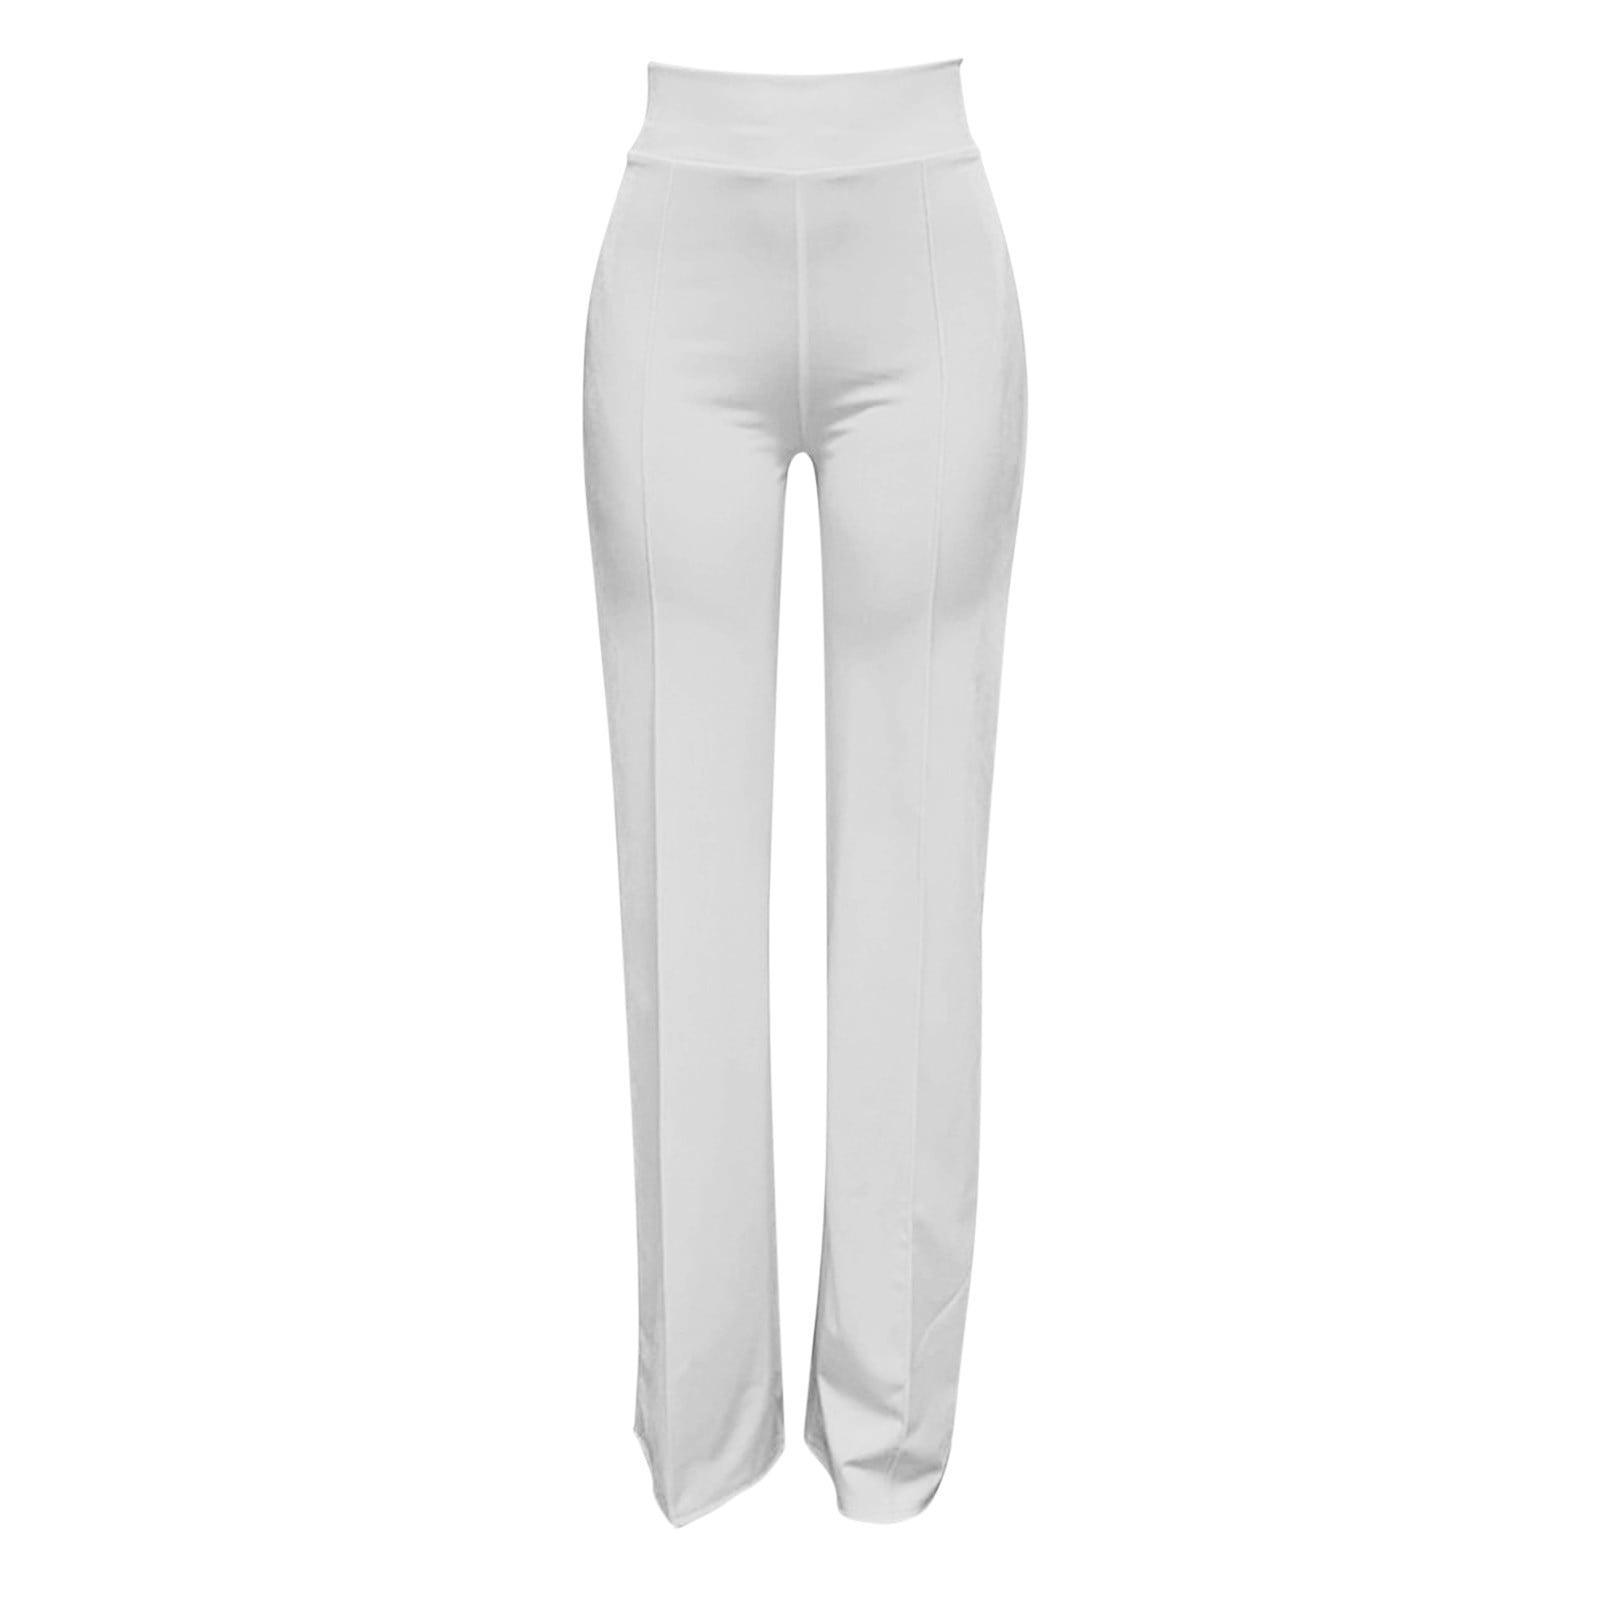 MRULIC pants for women Women Stretchy Straight Leg Pants Comfy Solid  Classic High Waisted Wide Leg Long Bootcut Pant Slacks Work Office women's  pants White + US 6 